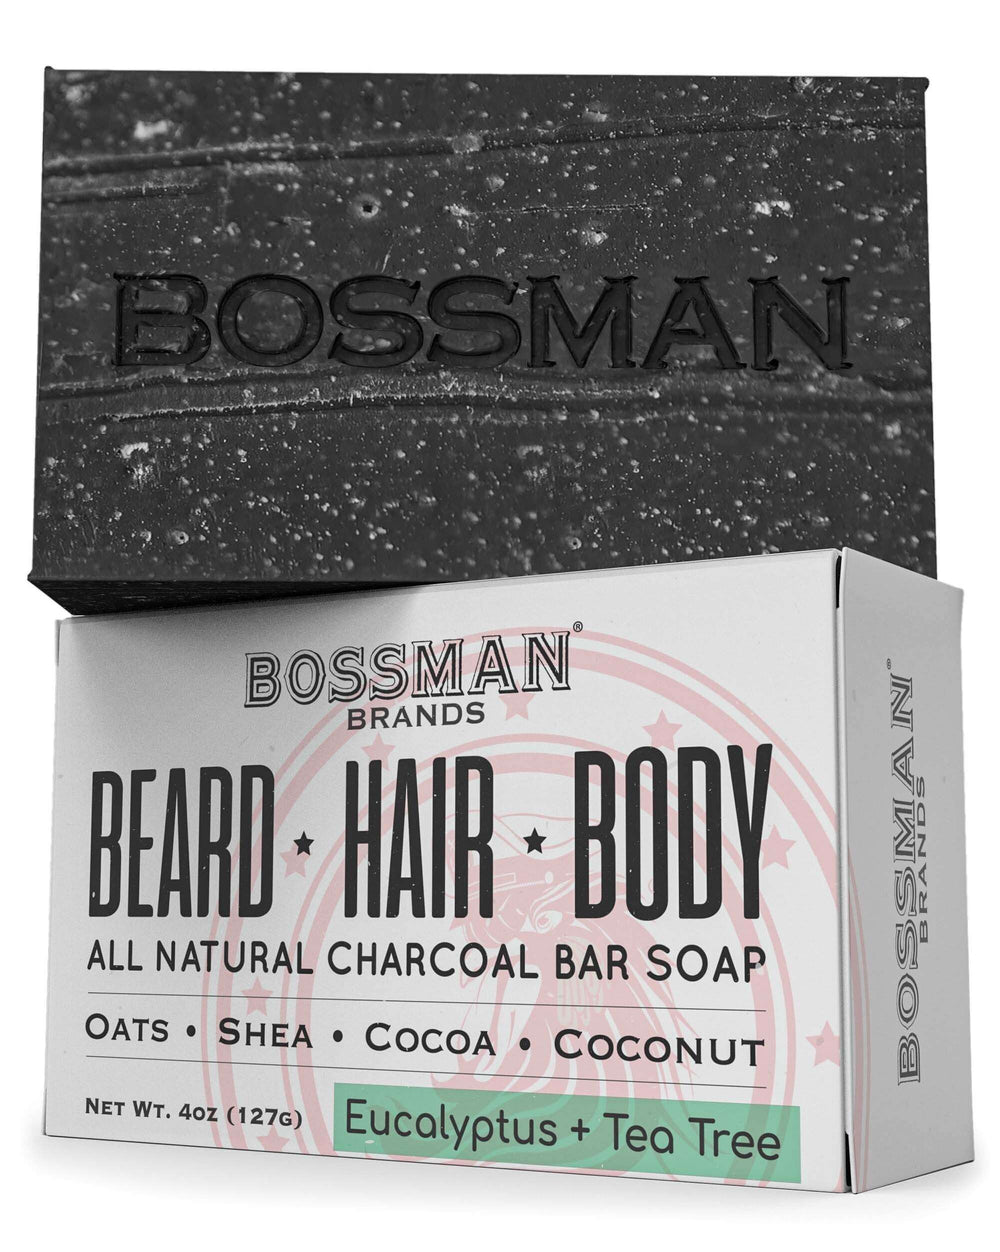 All Natural Exfoliating Beard, Hair & Body Bar Soap | Man Bar Soap